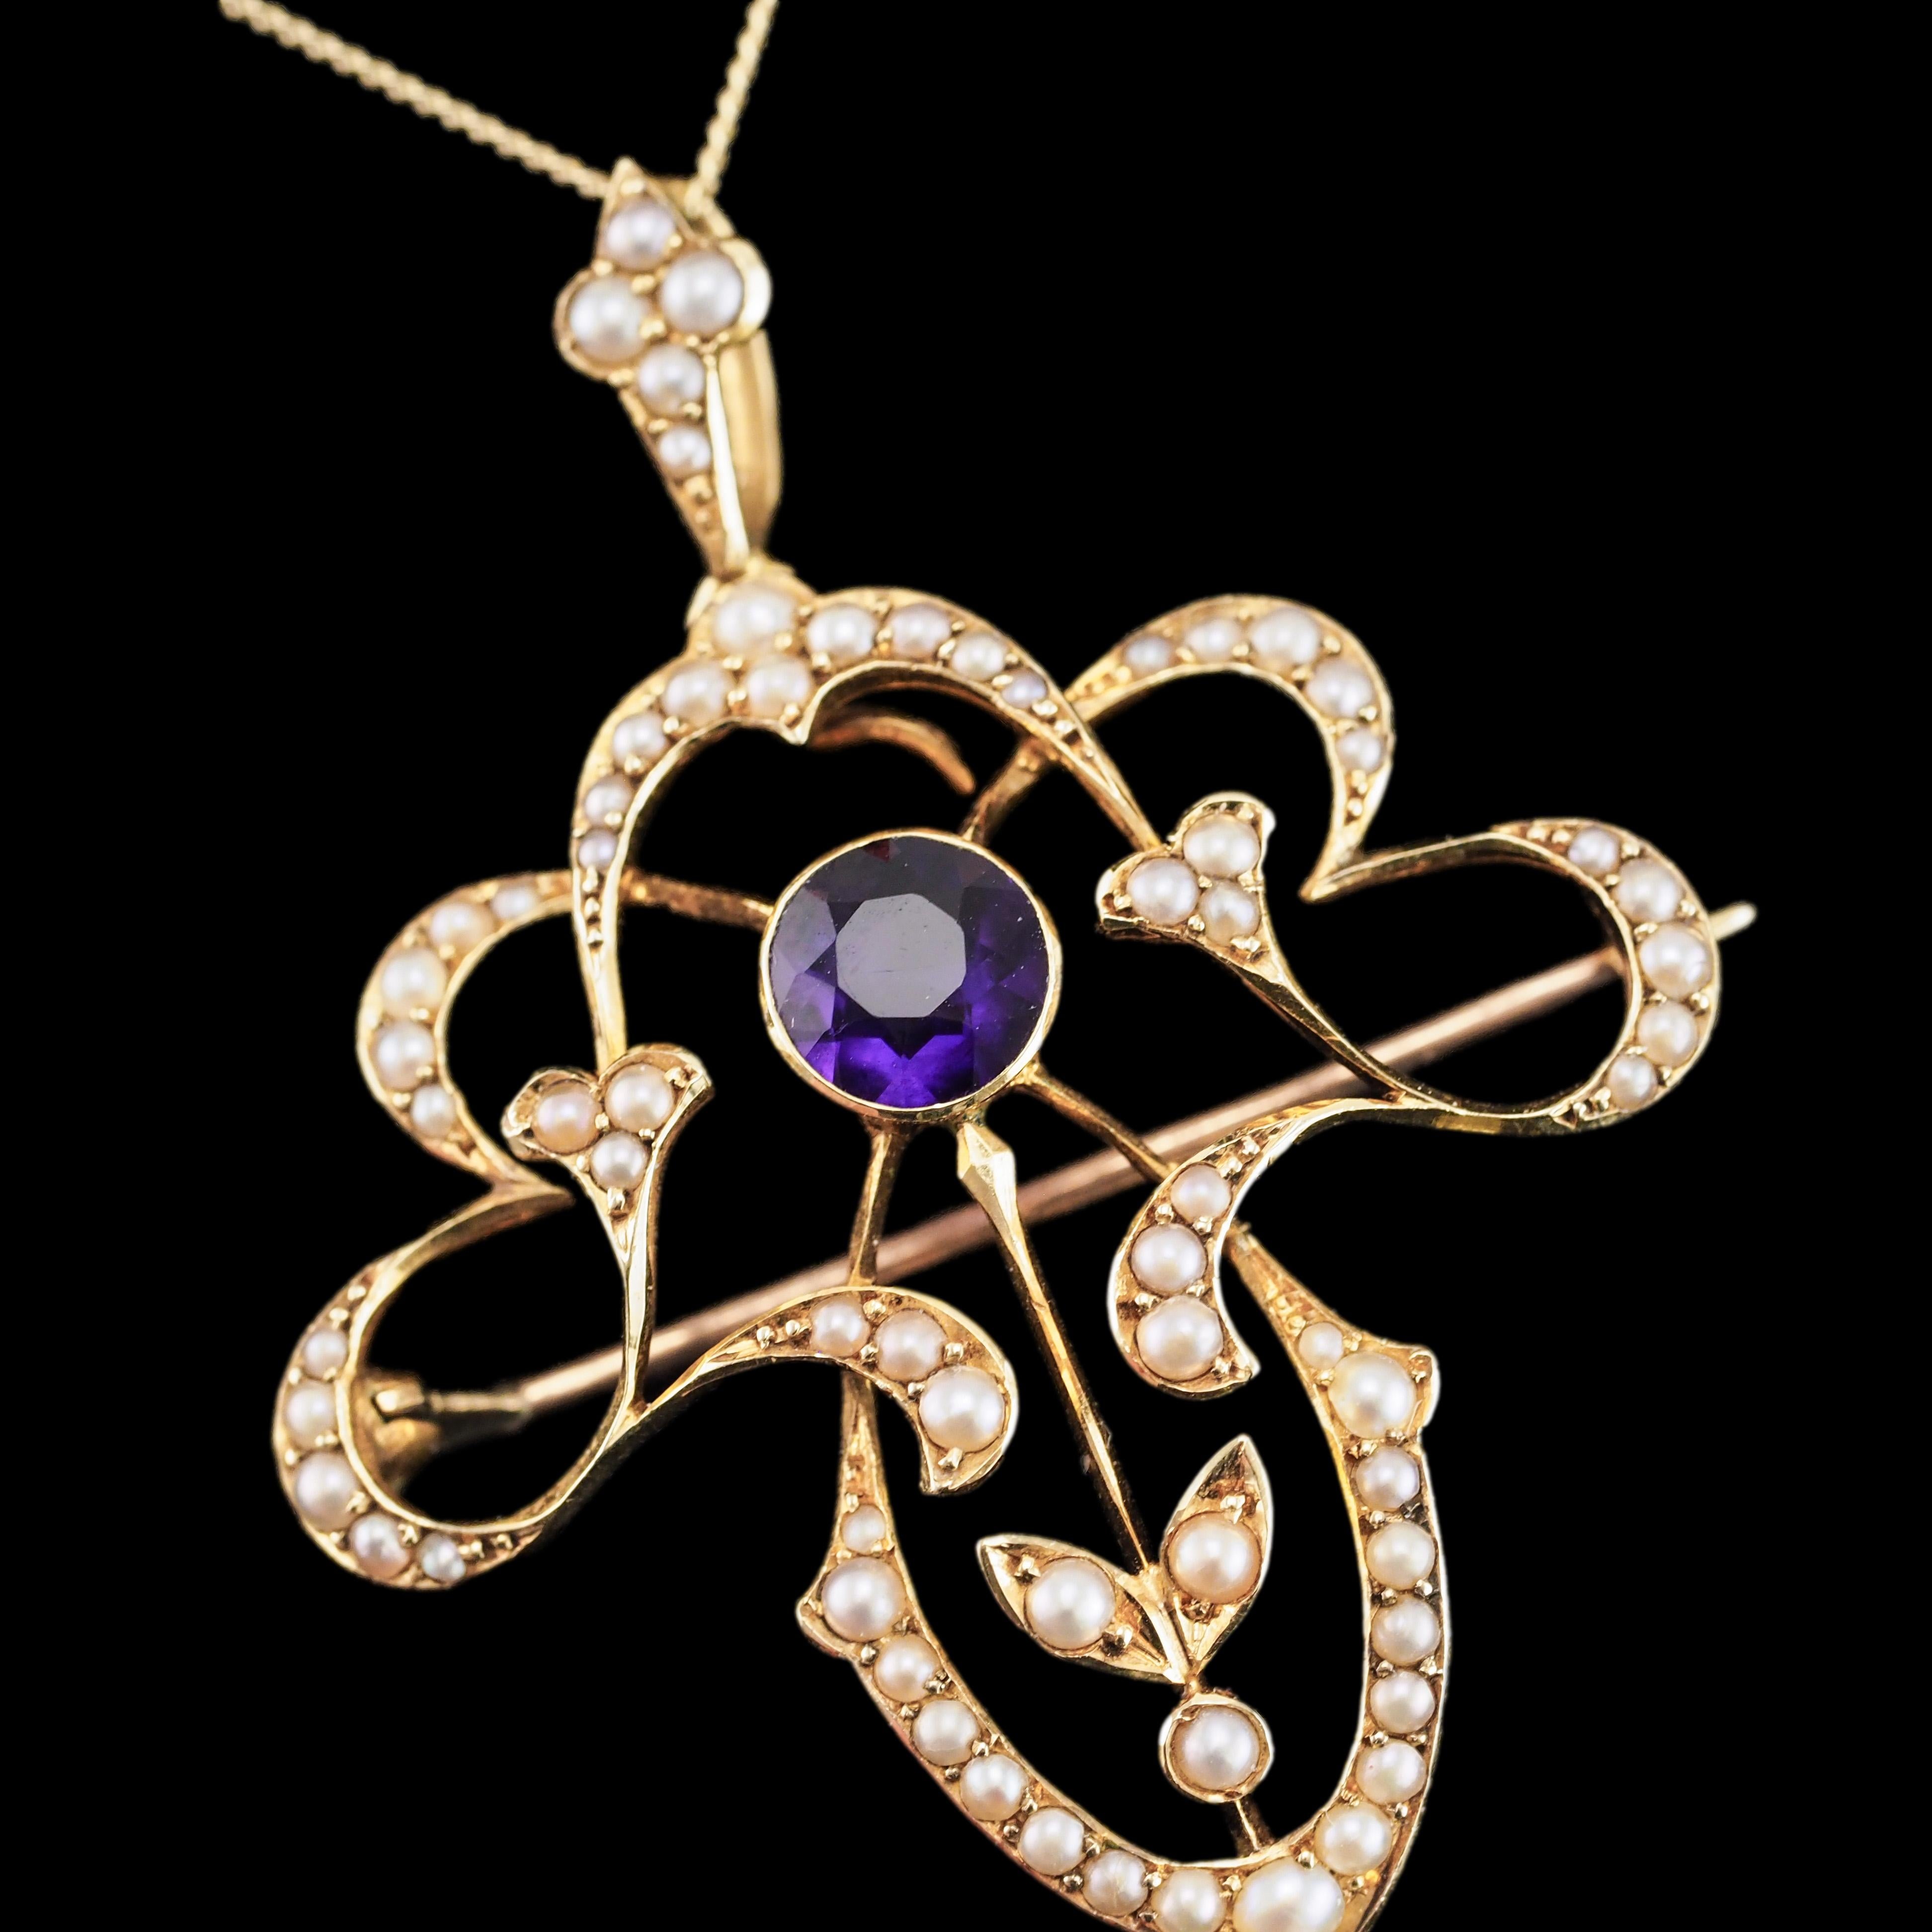 Antique Edwardian Amethyst & Seed Pearl 15K Gold Pendant Necklace Art Nouveau  For Sale 1